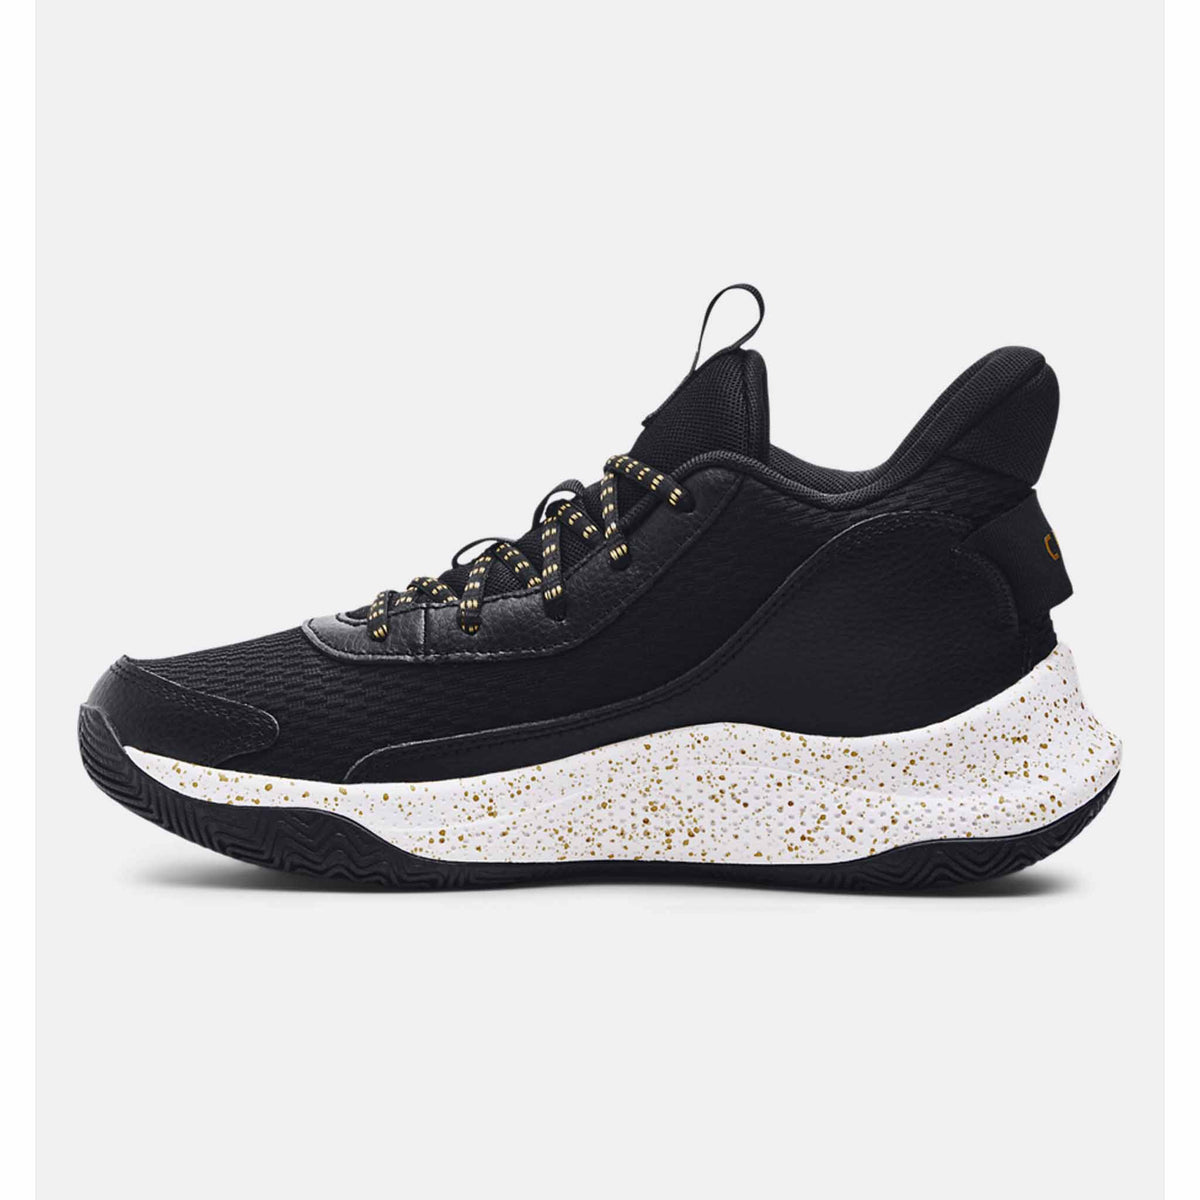 Under Armour Curry 3Z7 chaussures de basketball pour adulte - Black / White